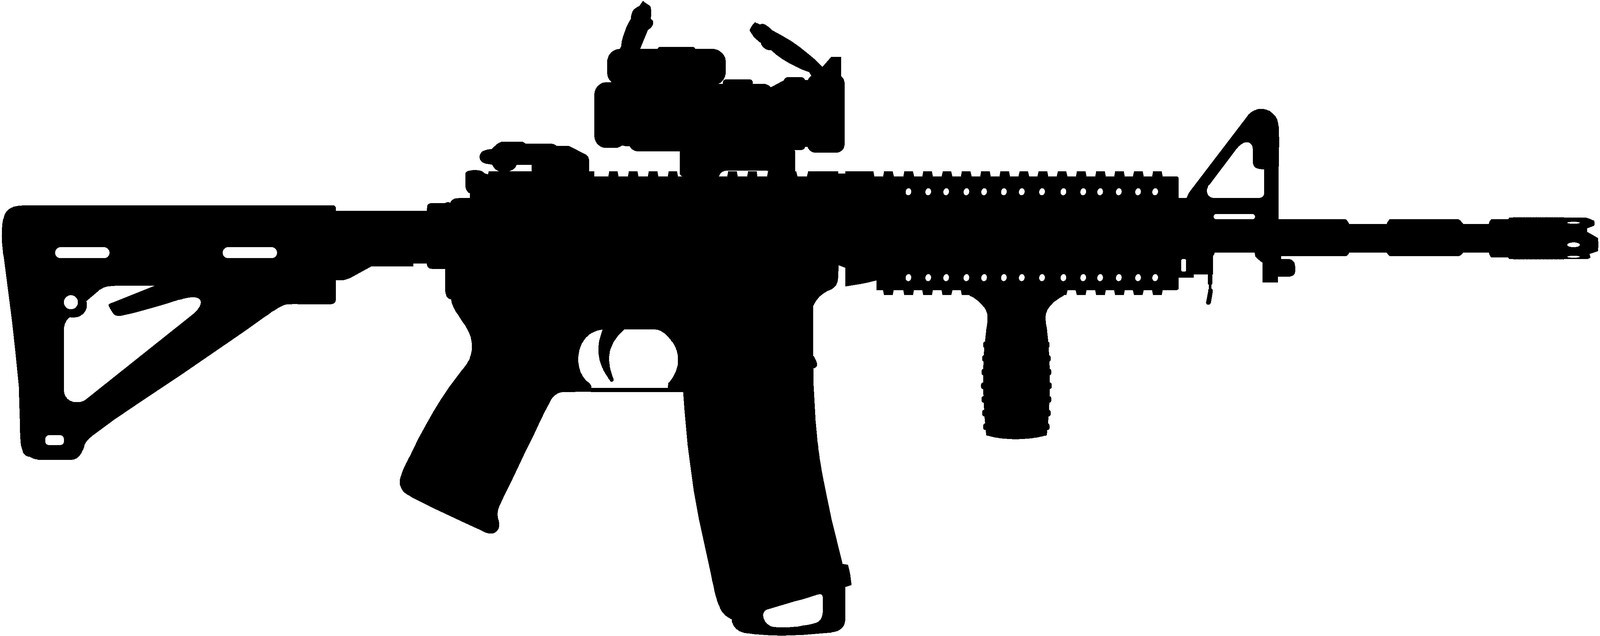 Clipart 22 rifle no scope